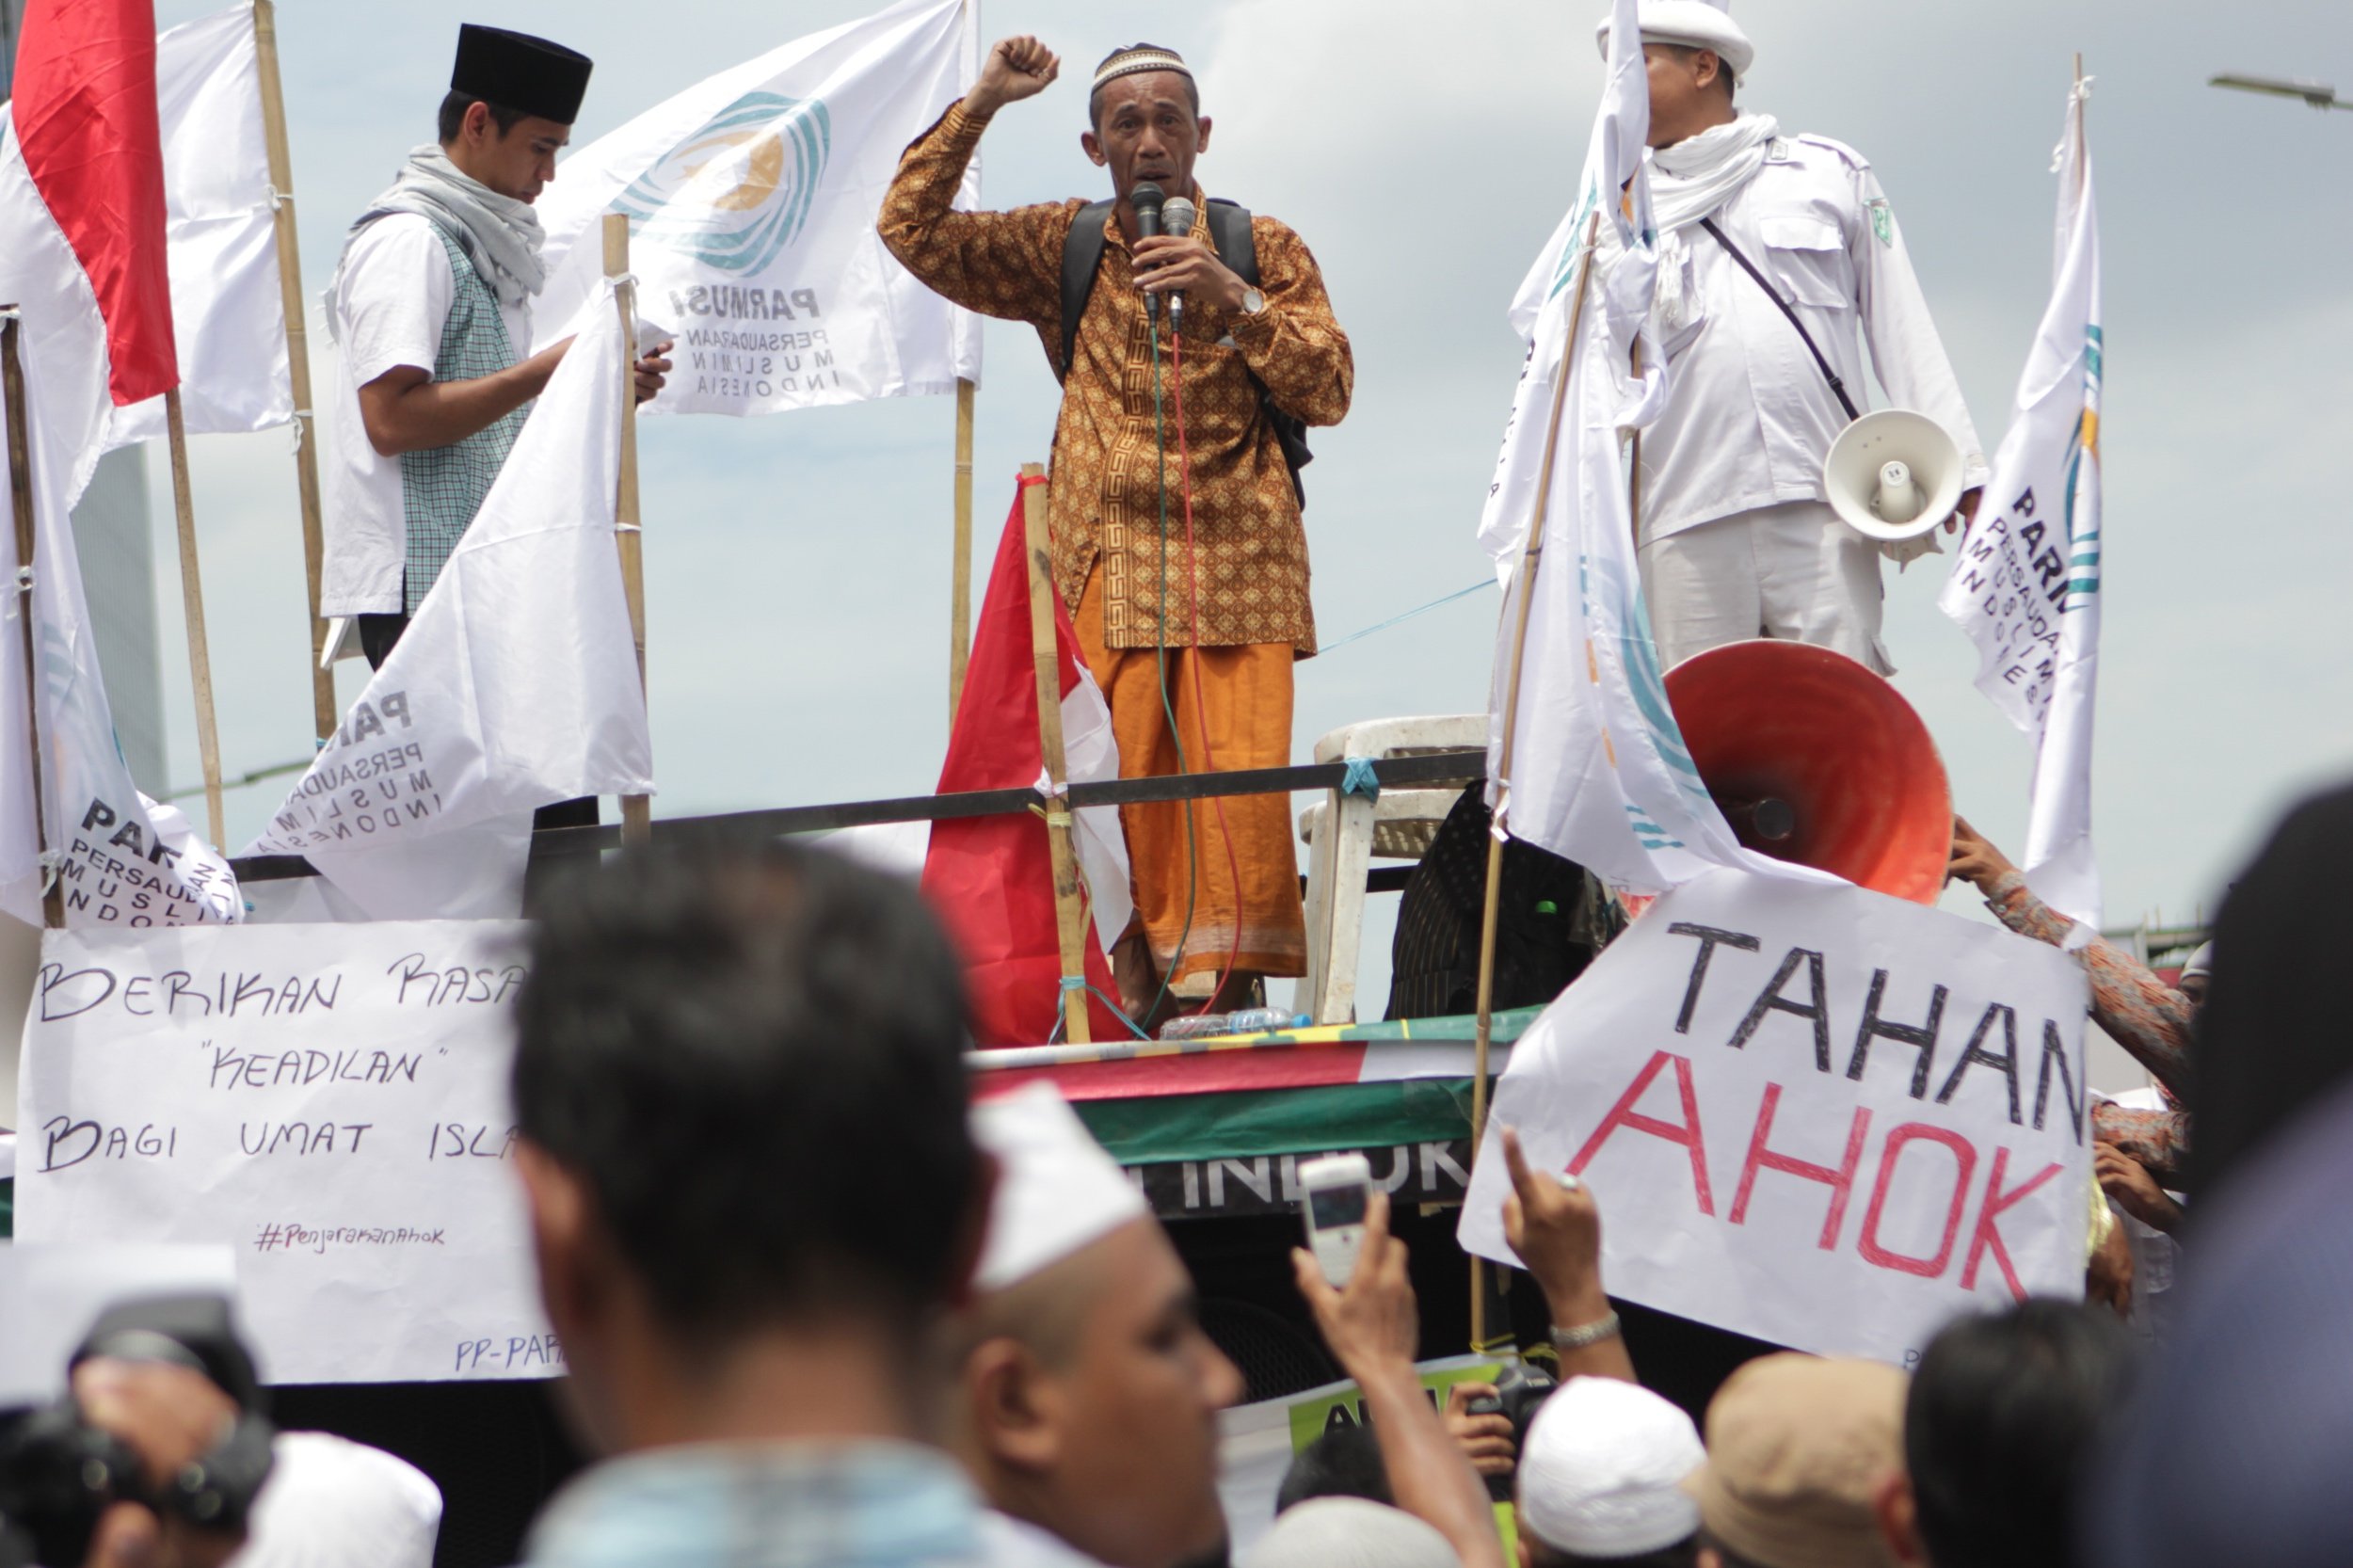 Puluhan massa melakukan aksi demonstrasi di depan bekas gedung Pengadilan Jakarta Pusat, Jakarta, Selasa (13/12). saat Ahok membacakan nota keberatan dalam sidang perdana kasus dugaan penodaan agama.